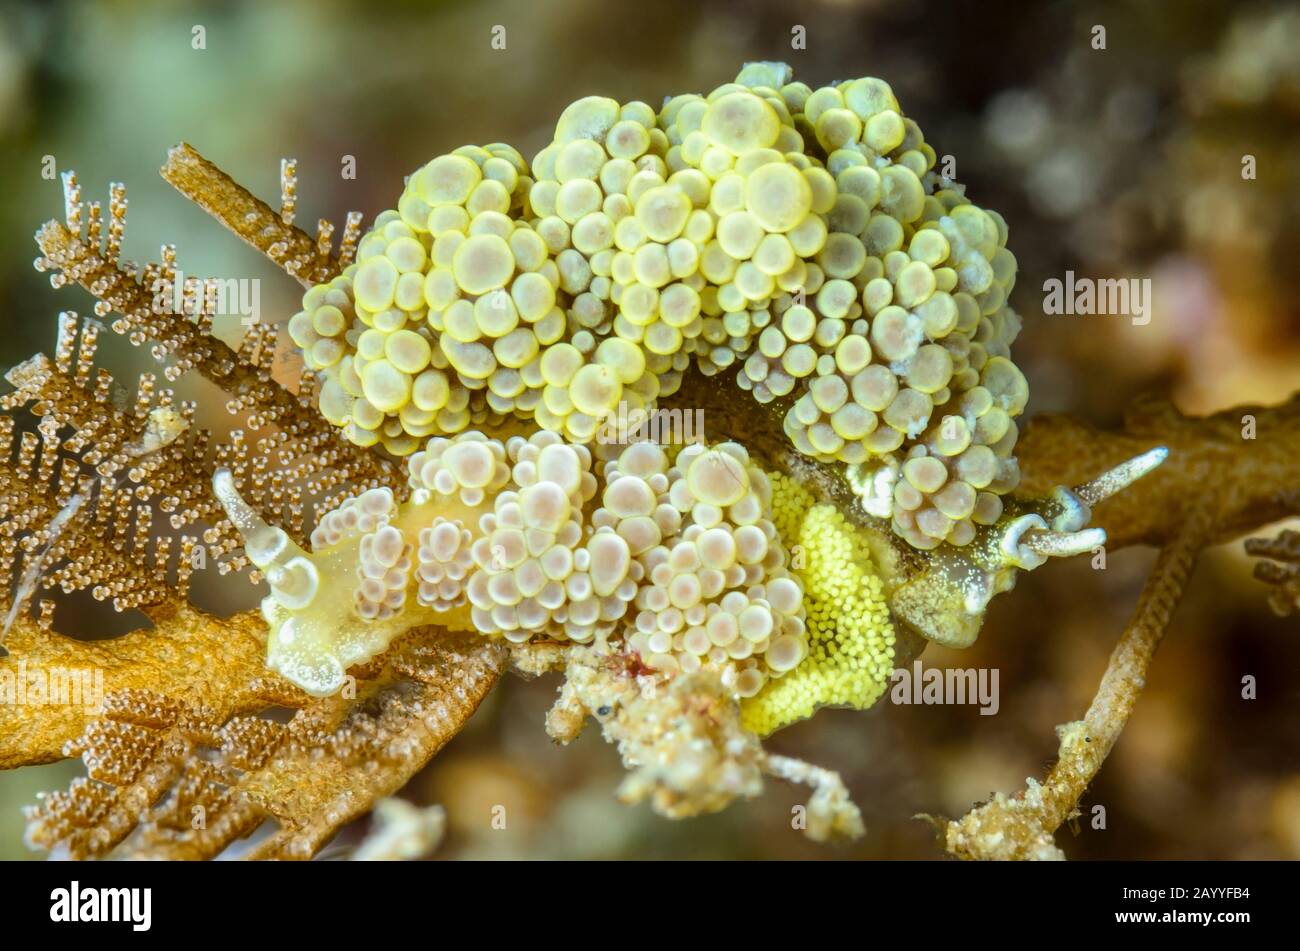 sea slug or nudibranch, Doto ussi, laying eggs, Lembeh Strait, North Sulawesi, Indonesia, Pacific Stock Photo